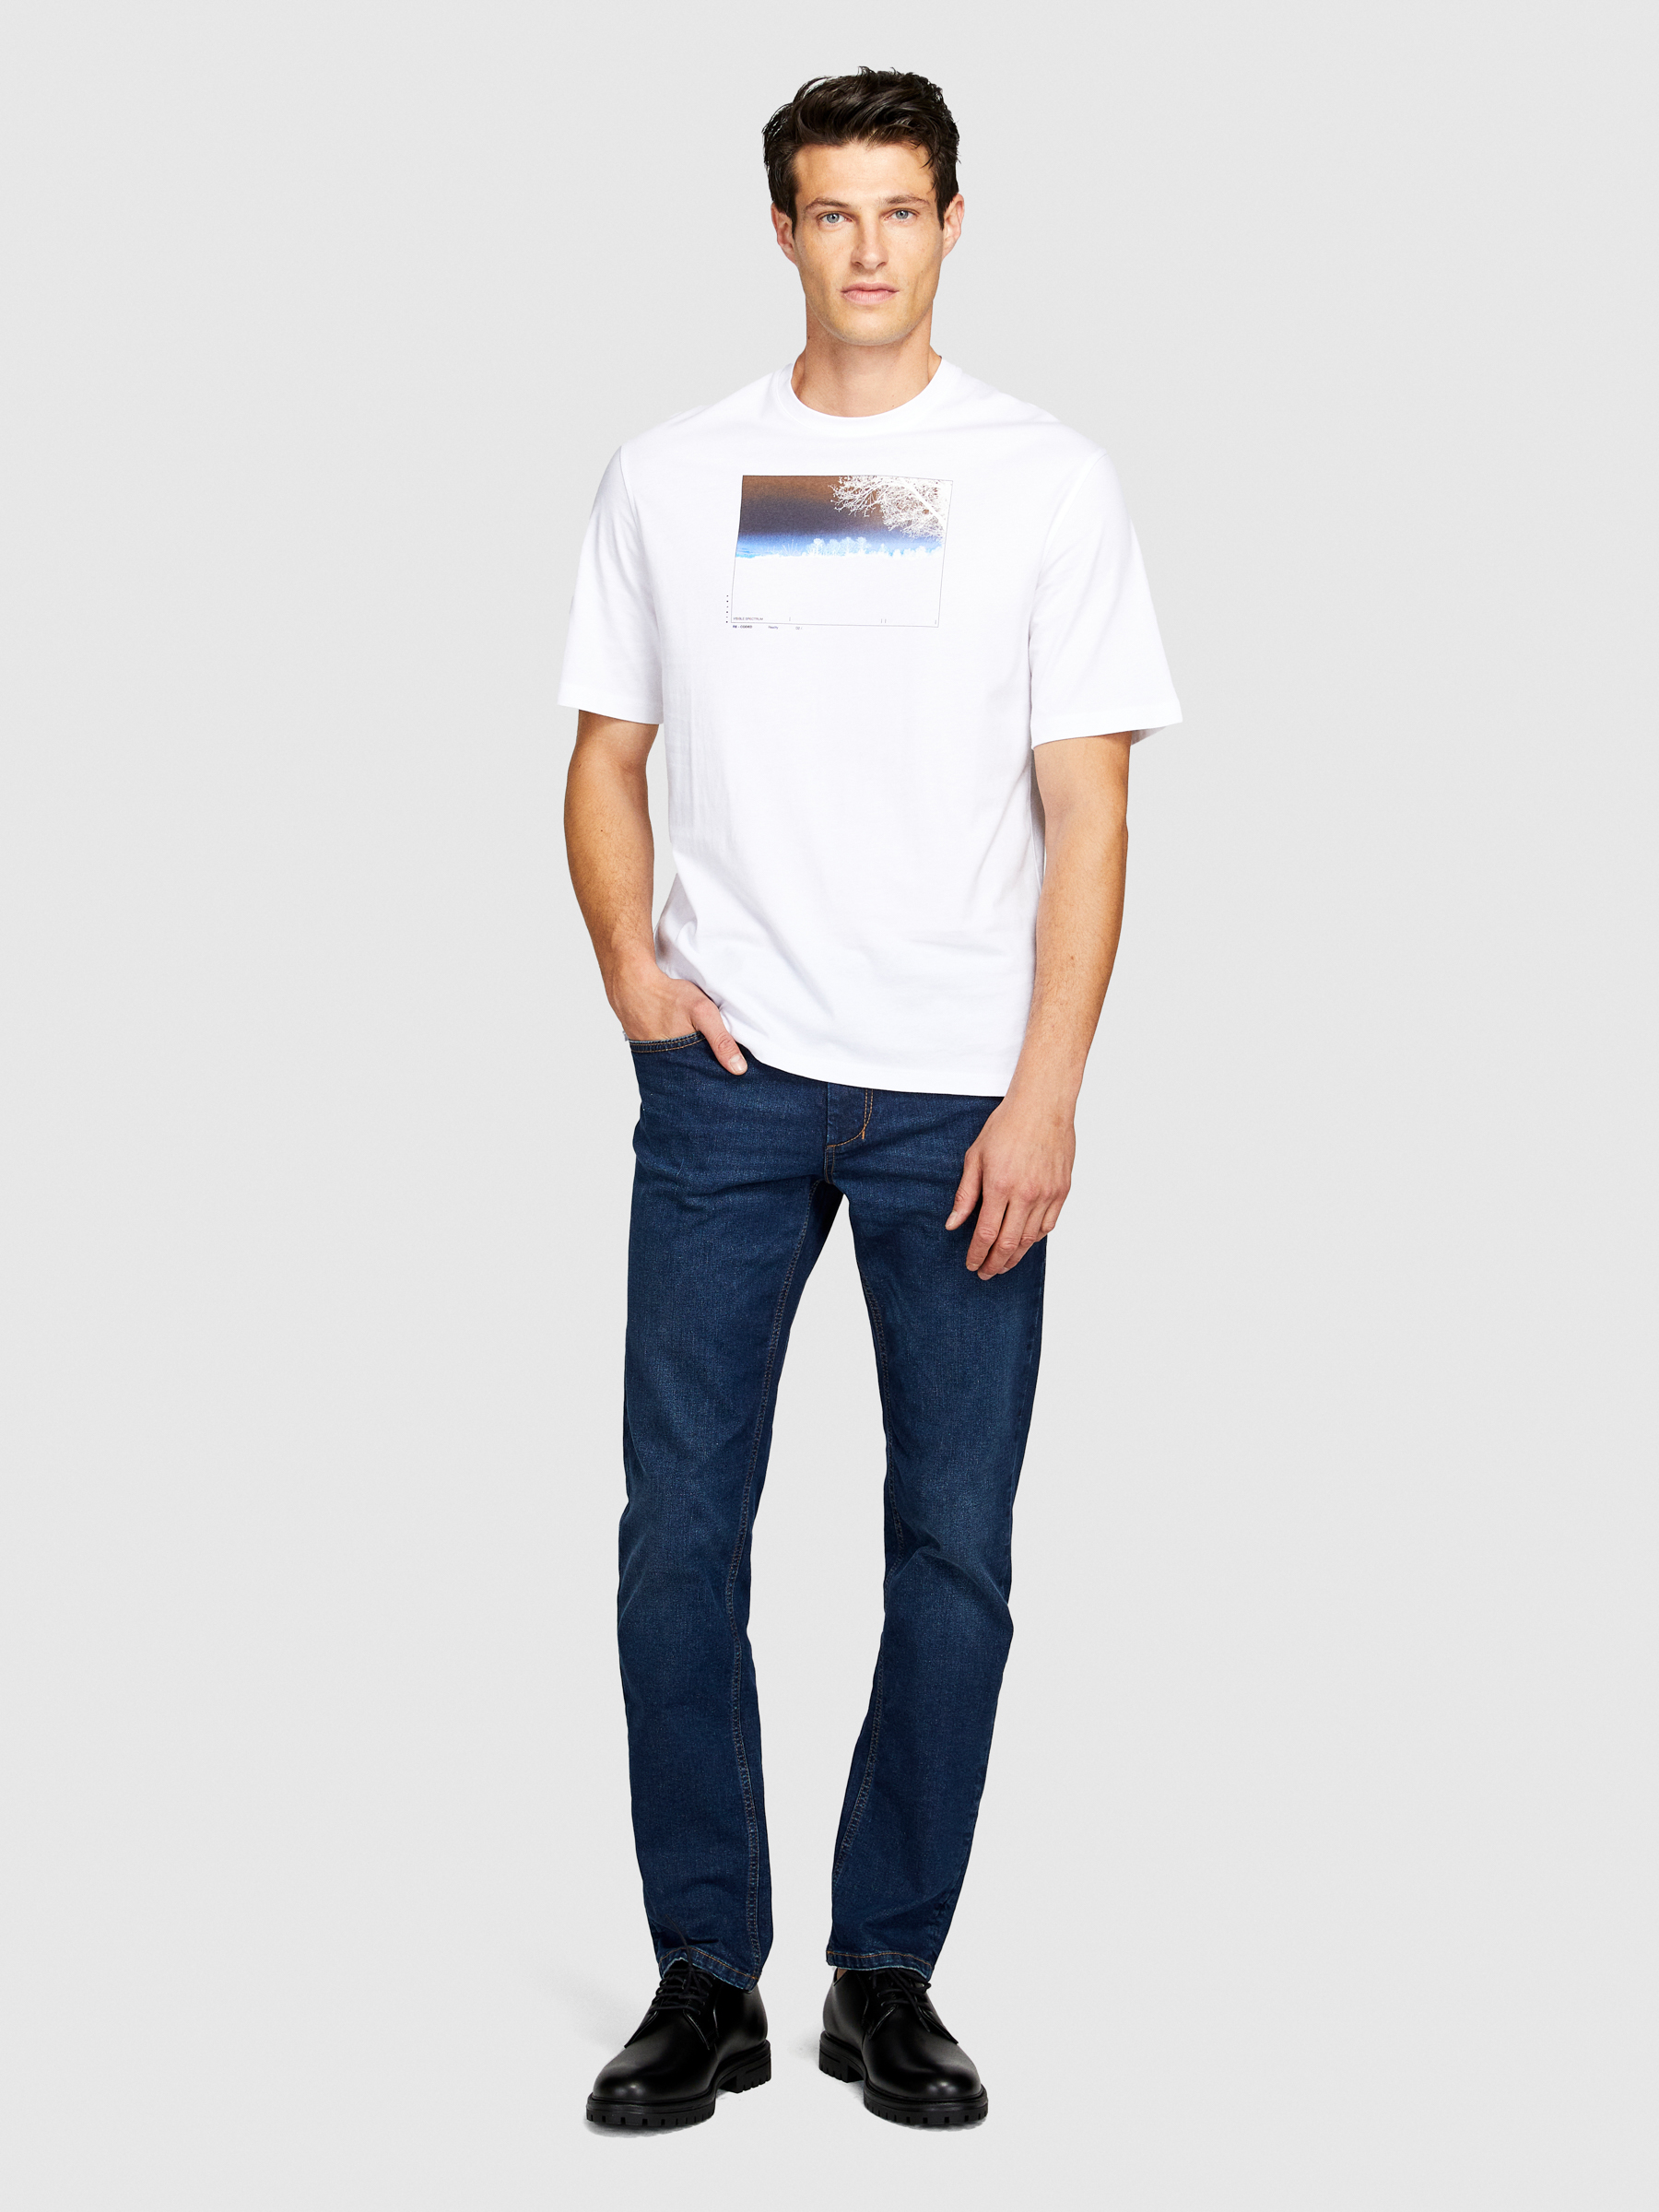 Sisley - T-shirt With Photographic Print, Man, White, Size: XL